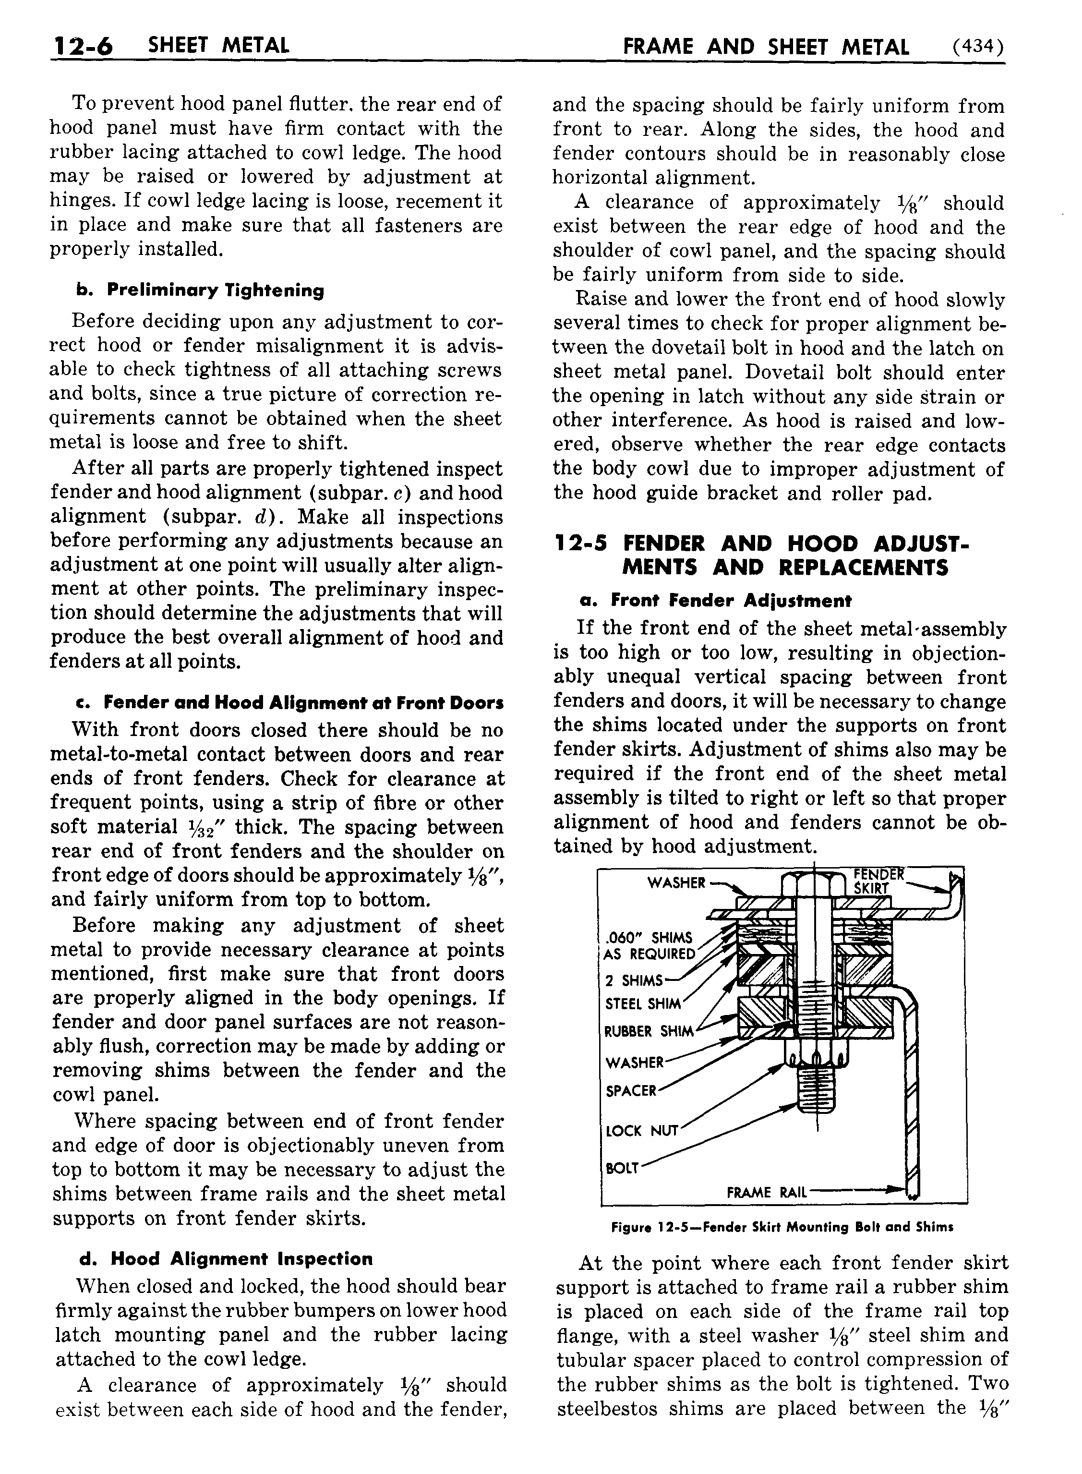 n_13 1954 Buick Shop Manual - Sheet Metal-006-006.jpg